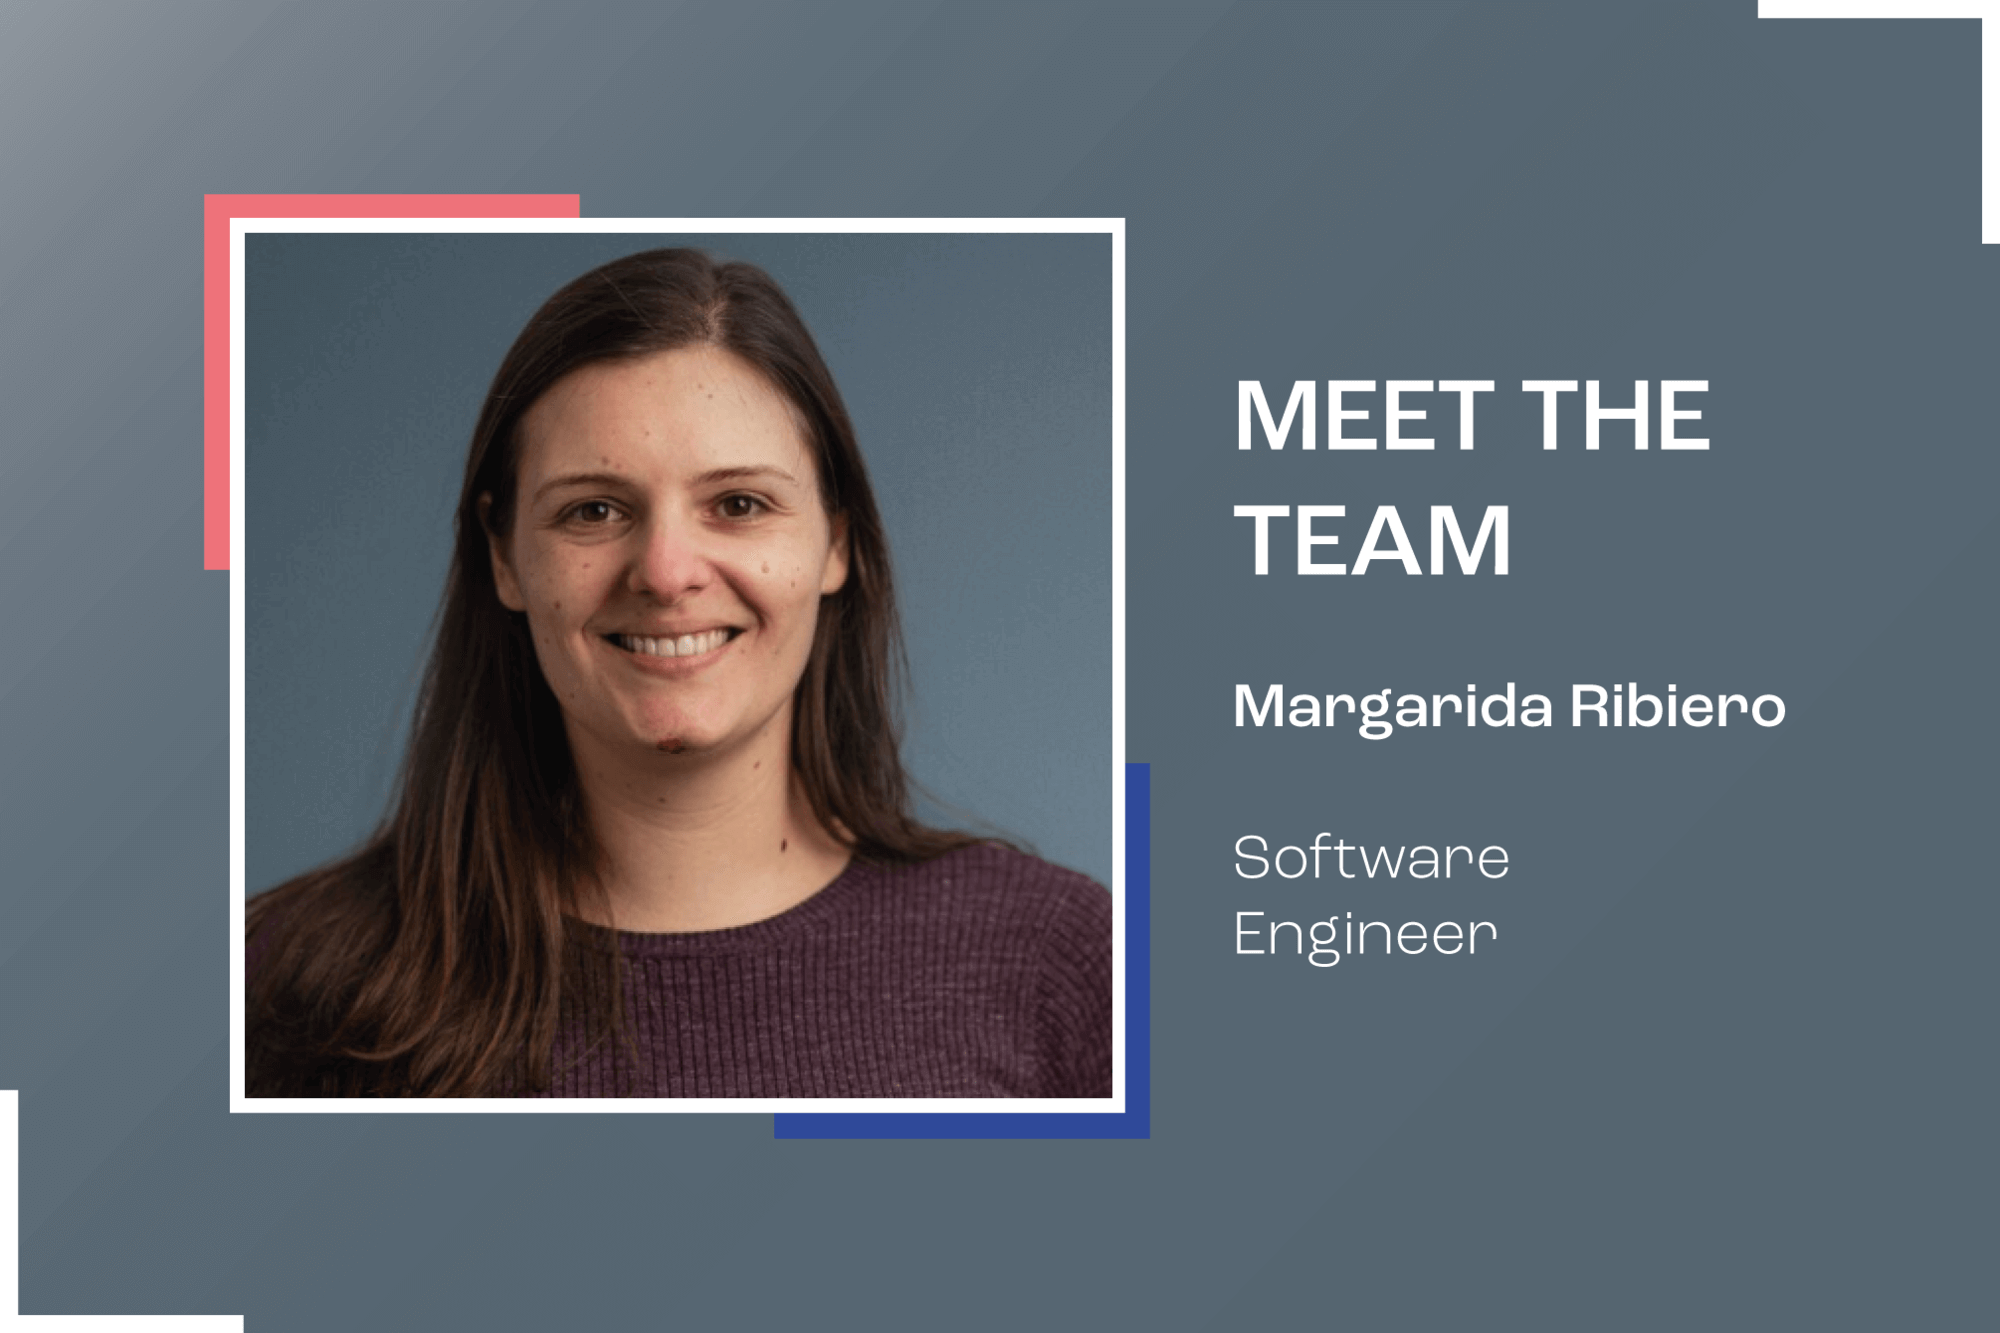 Meet The Team: Margarida Ribiero